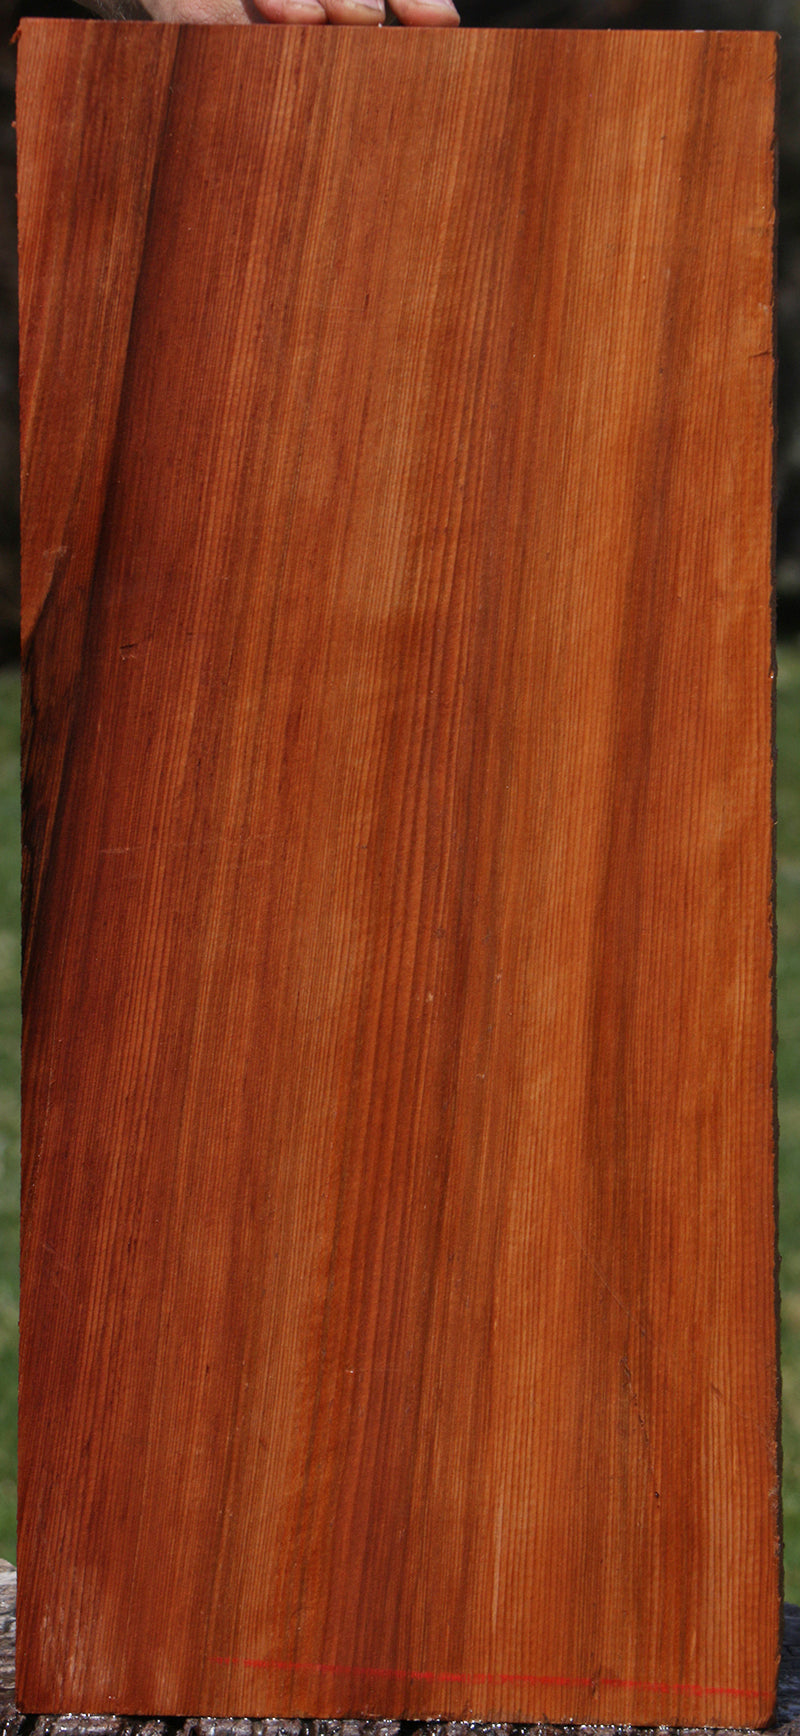 Old Growth Redwood Lumber